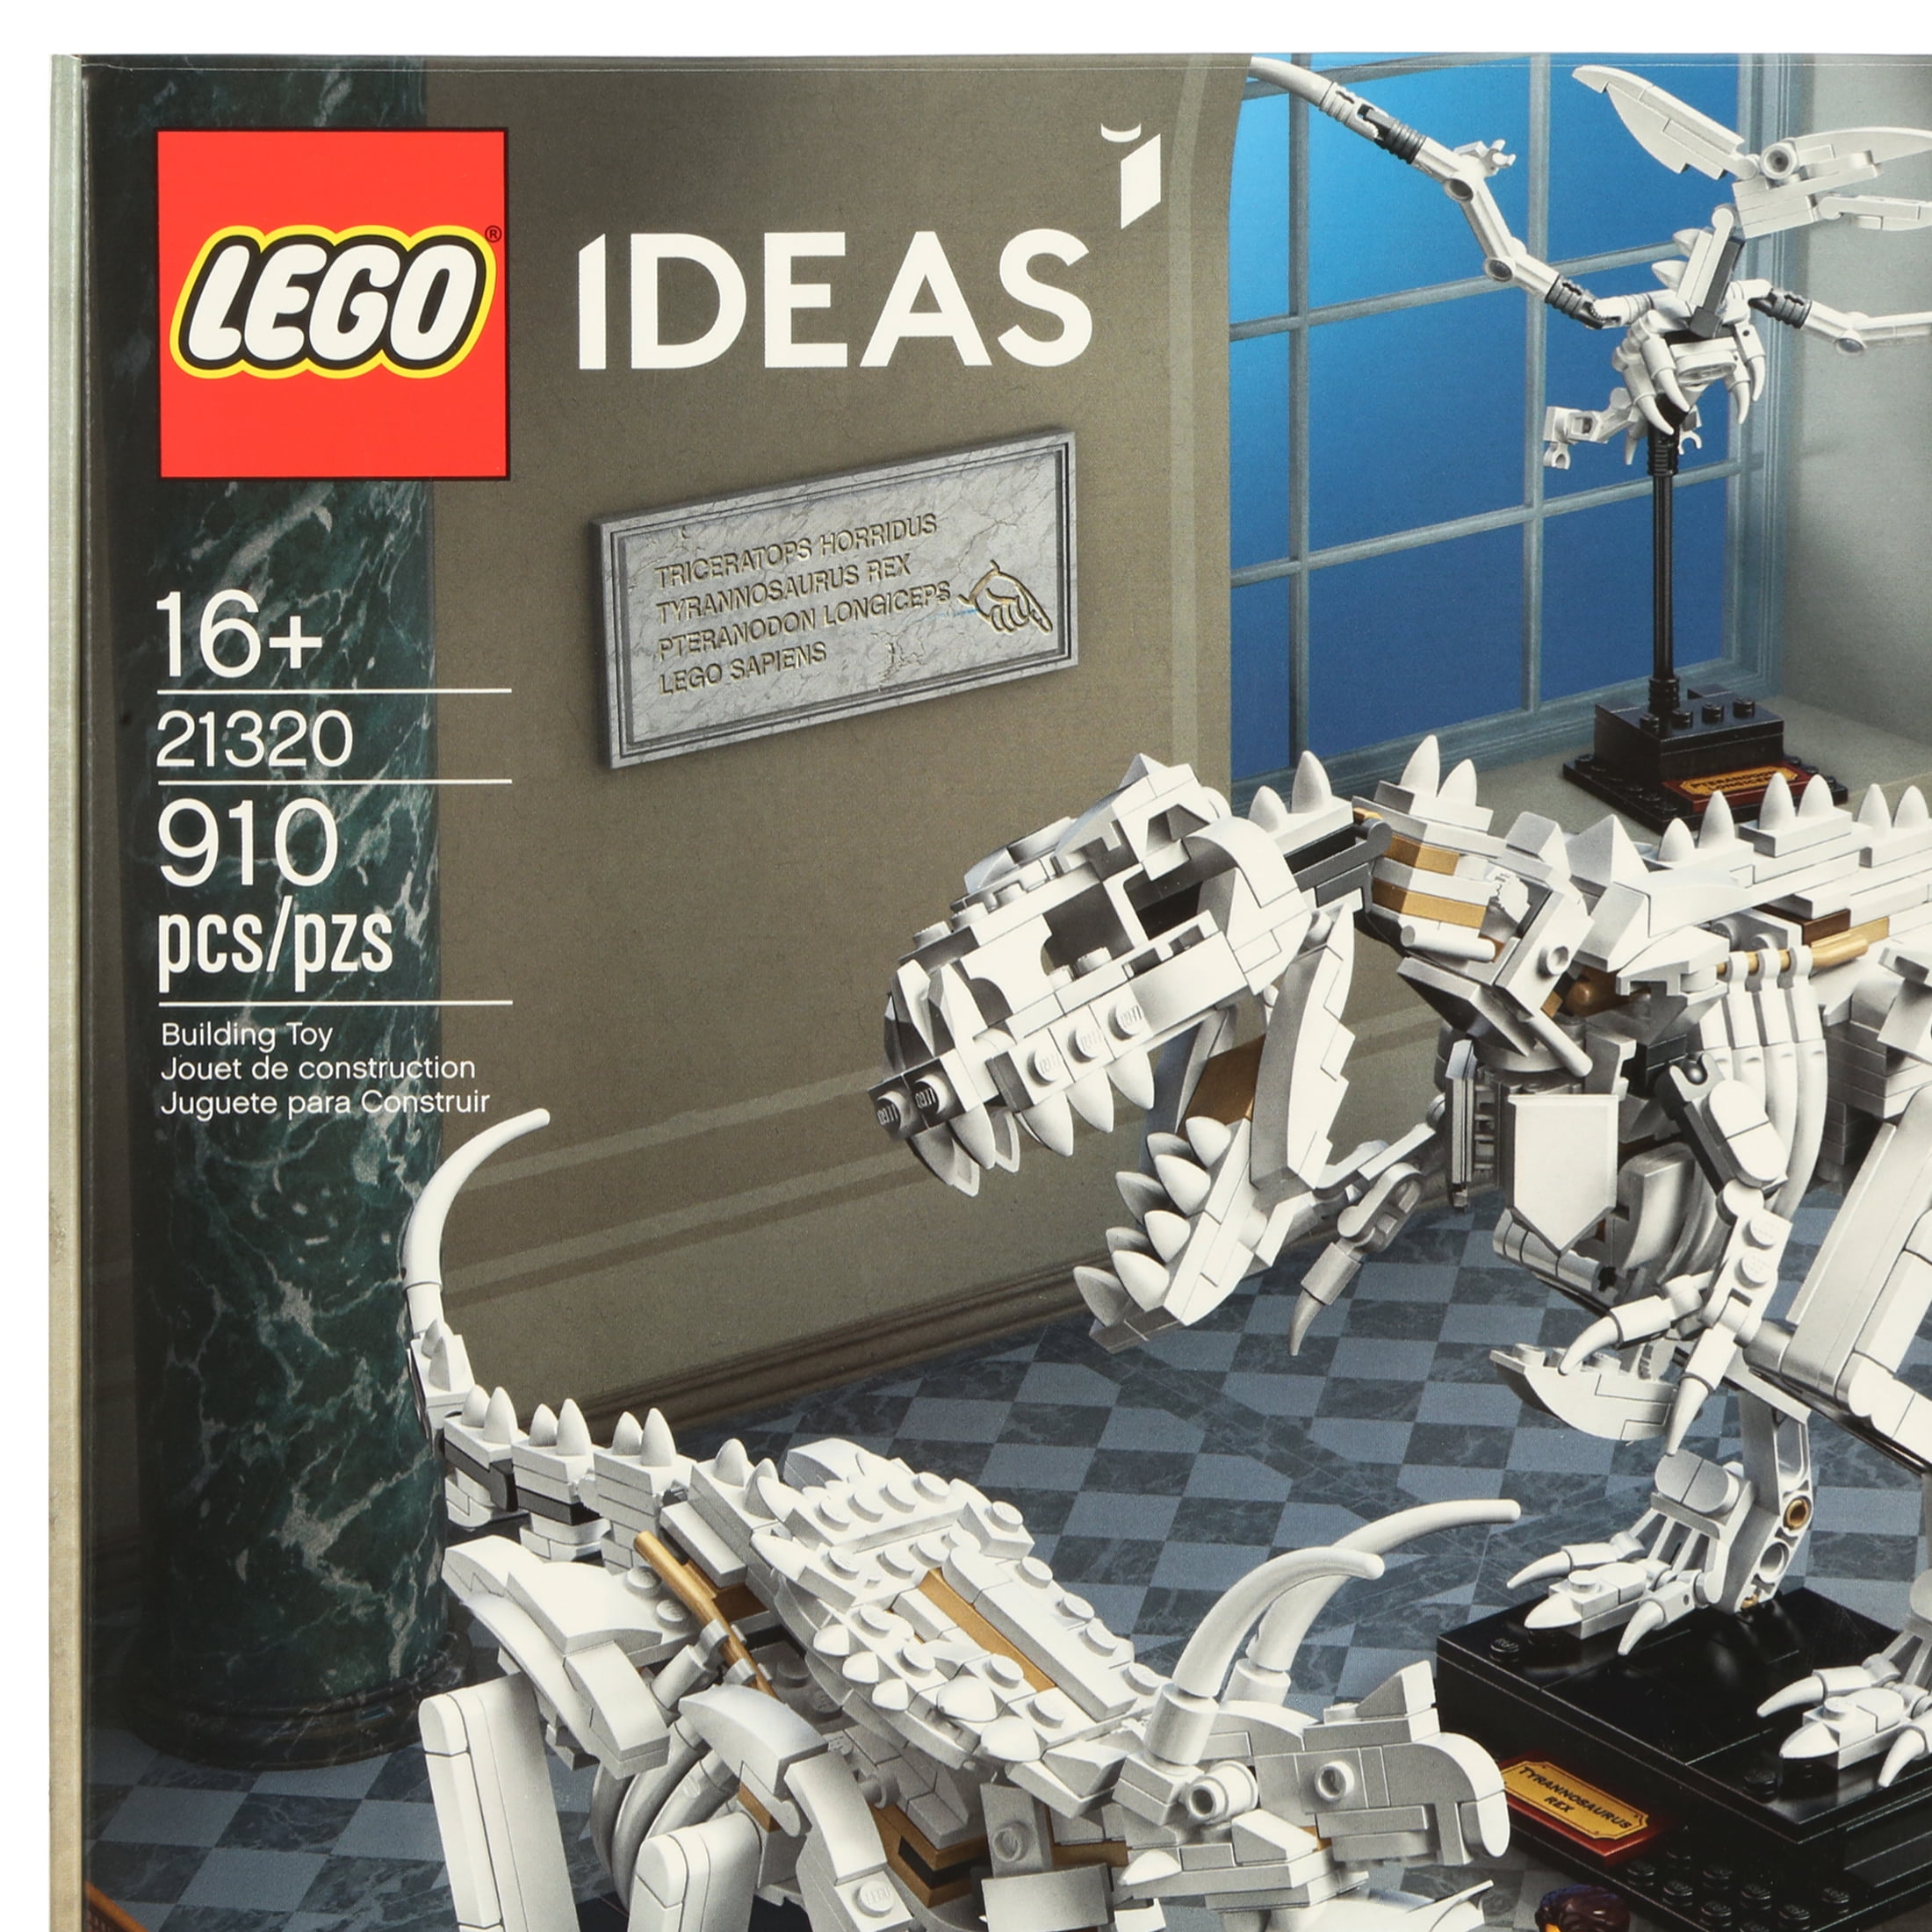 LEGO Ideas 21320 Dinosaur Fossils Building Kit (910 Pieces) 